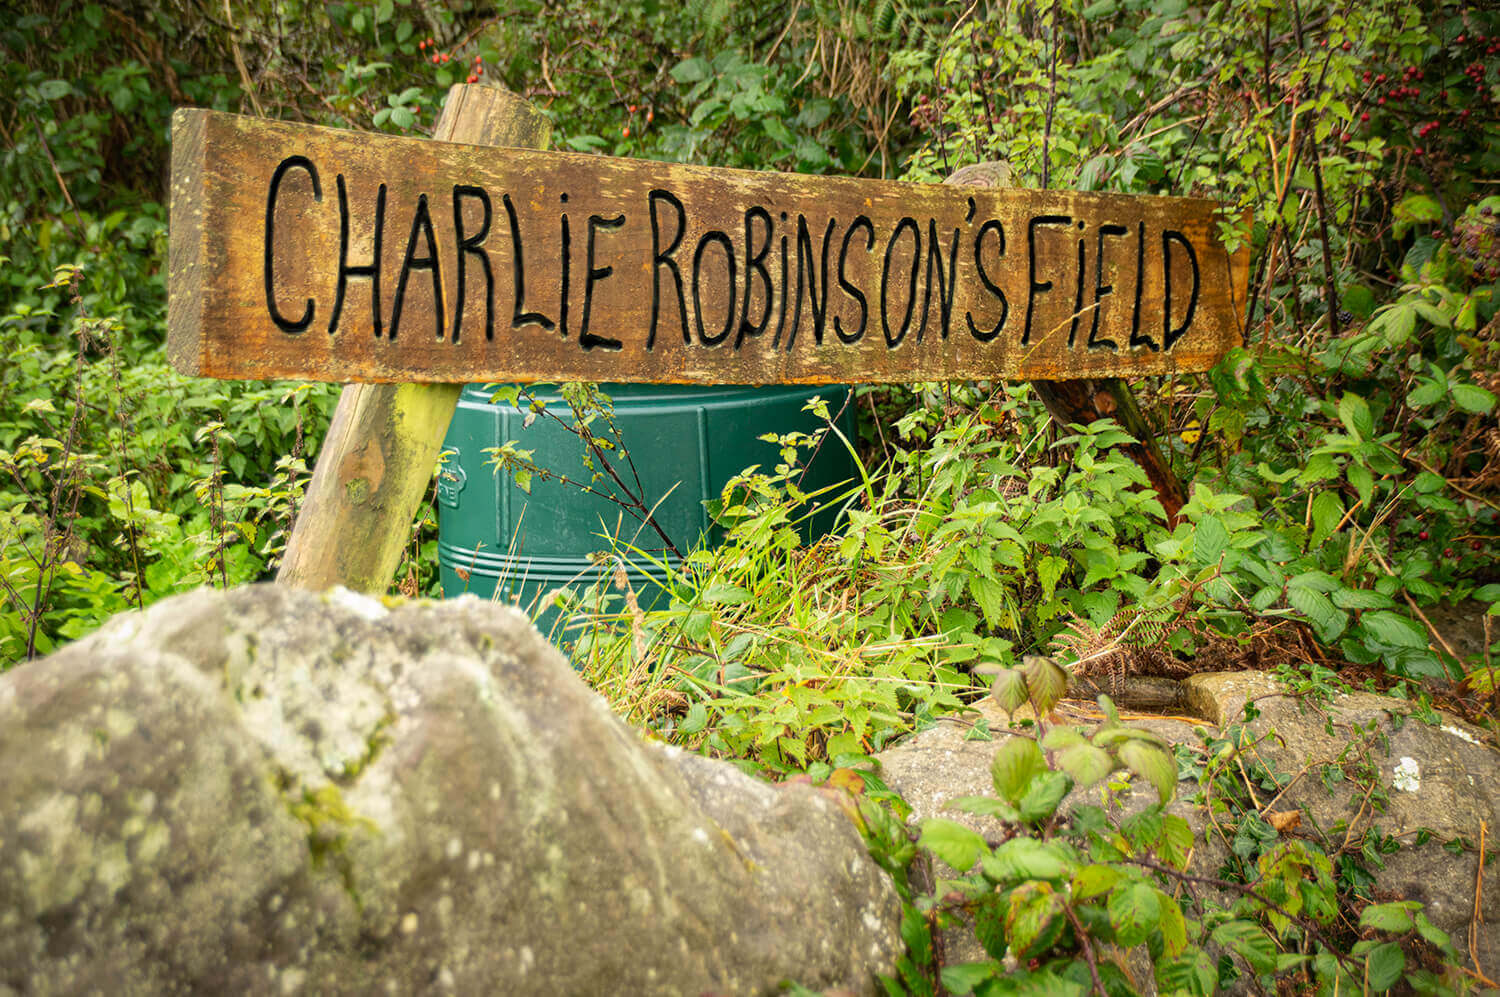 Charlie robinsons field board on rocks